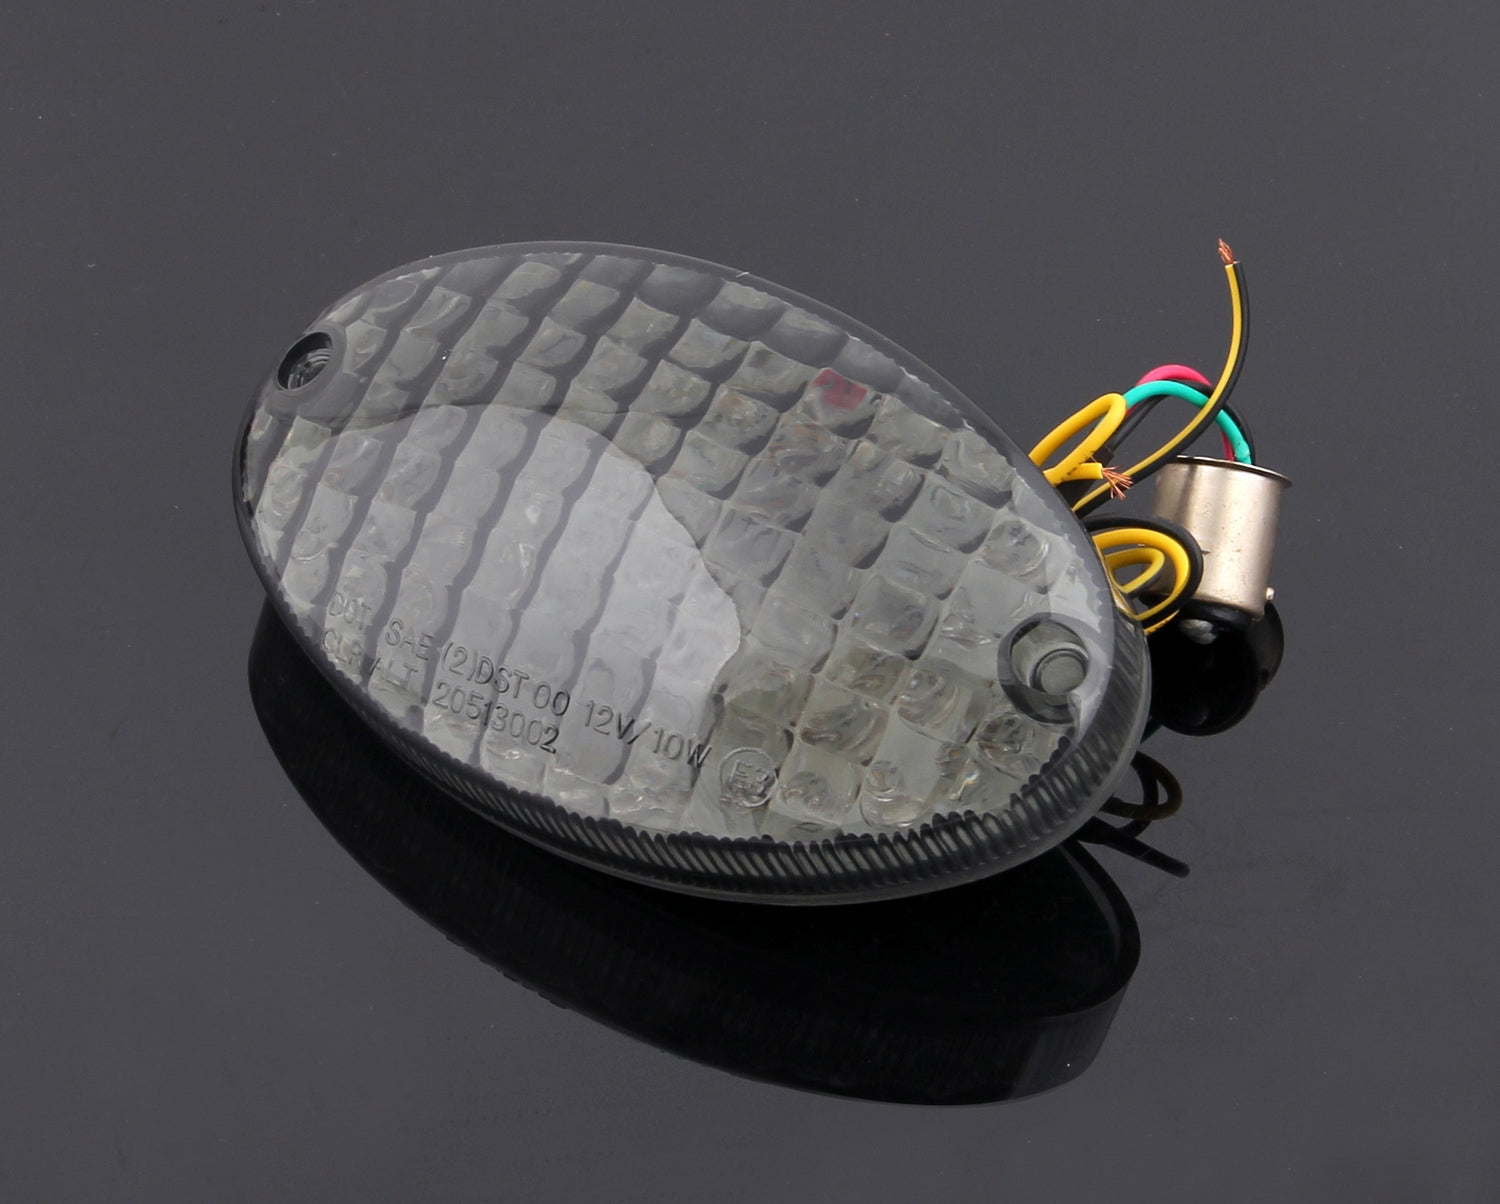 Clear LED Taillight integrated Turn Signals Buell Blast Firebolt 2002-2003